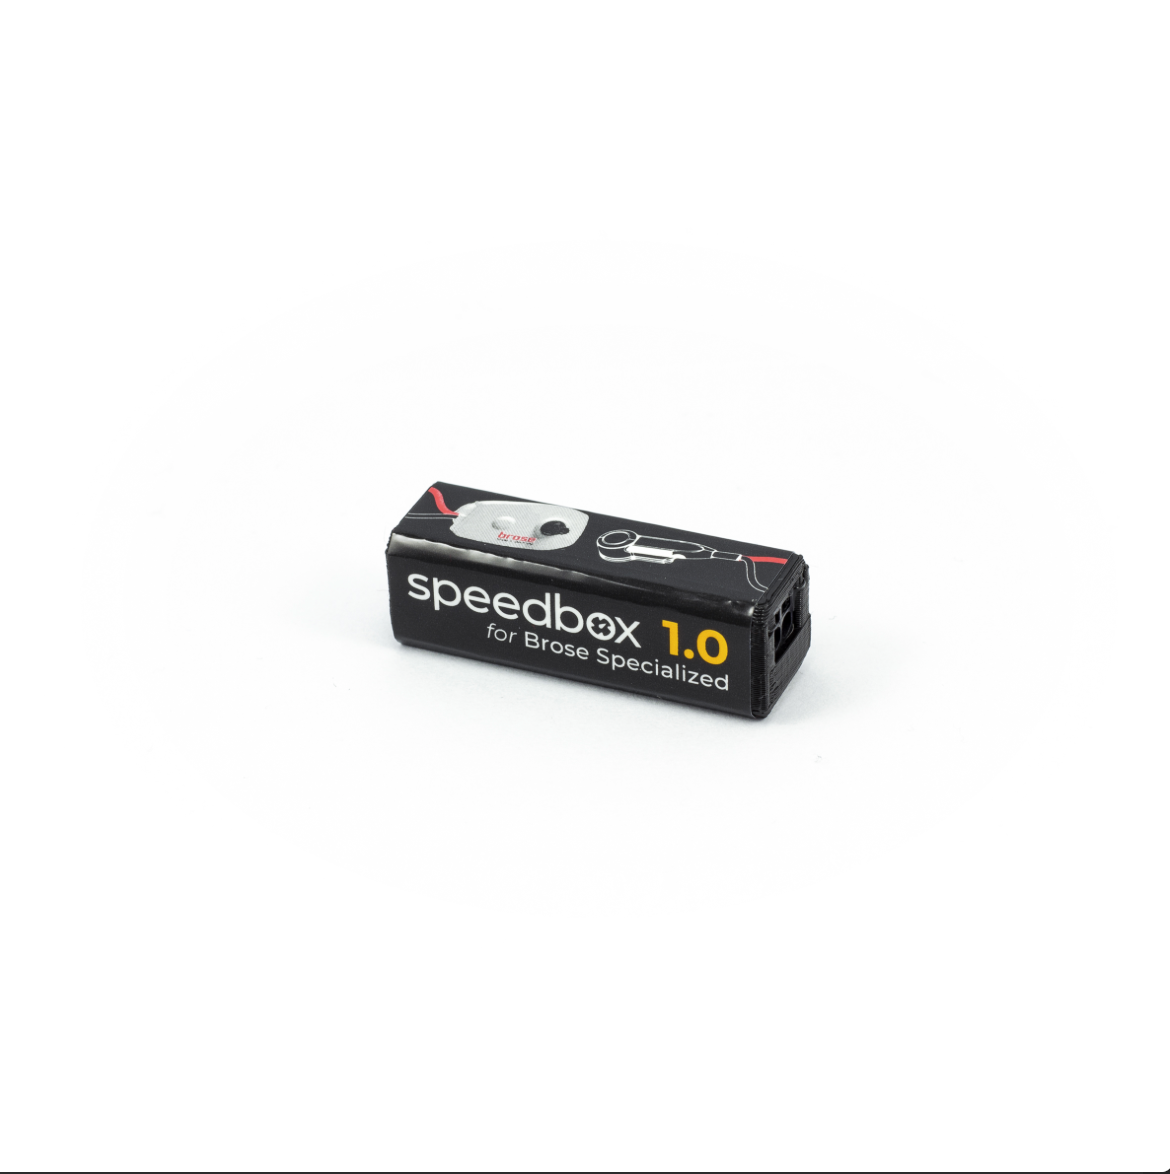 SpeedBox 1.0 for Brose Specialized Motor